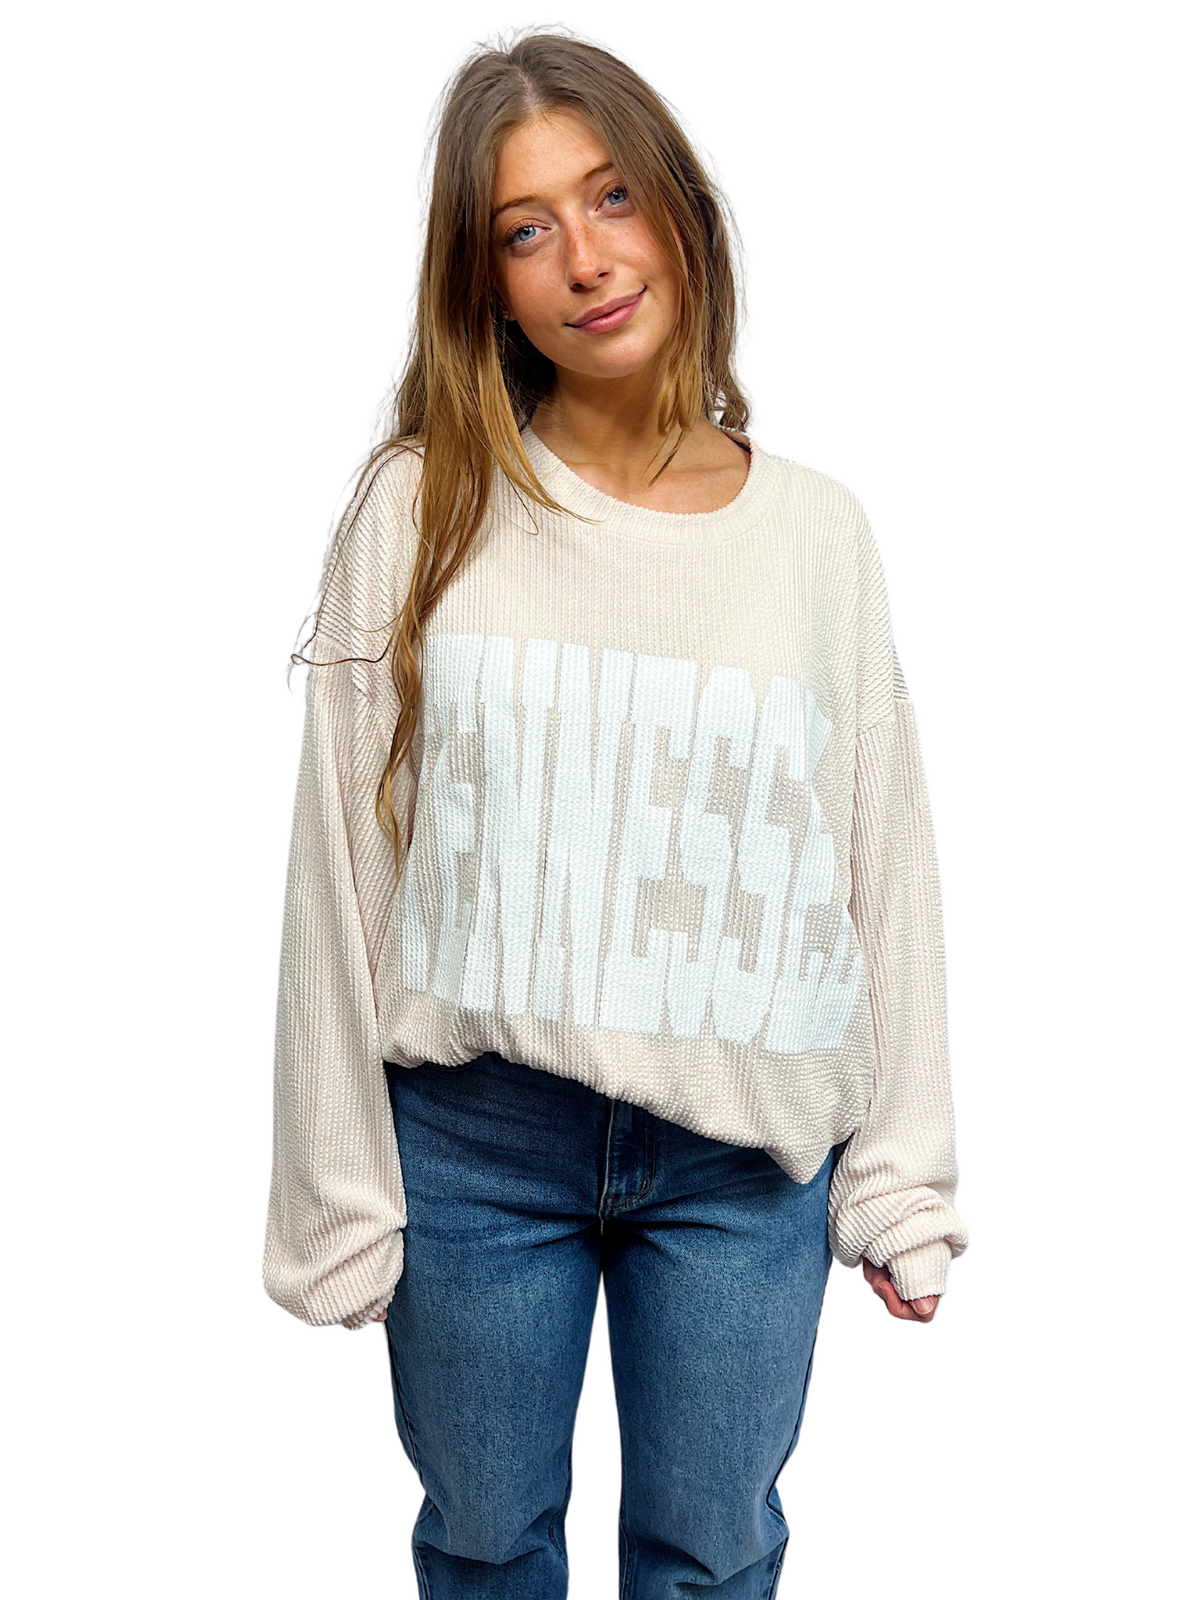 tennessee vols graphic sweatshirt in cream-front